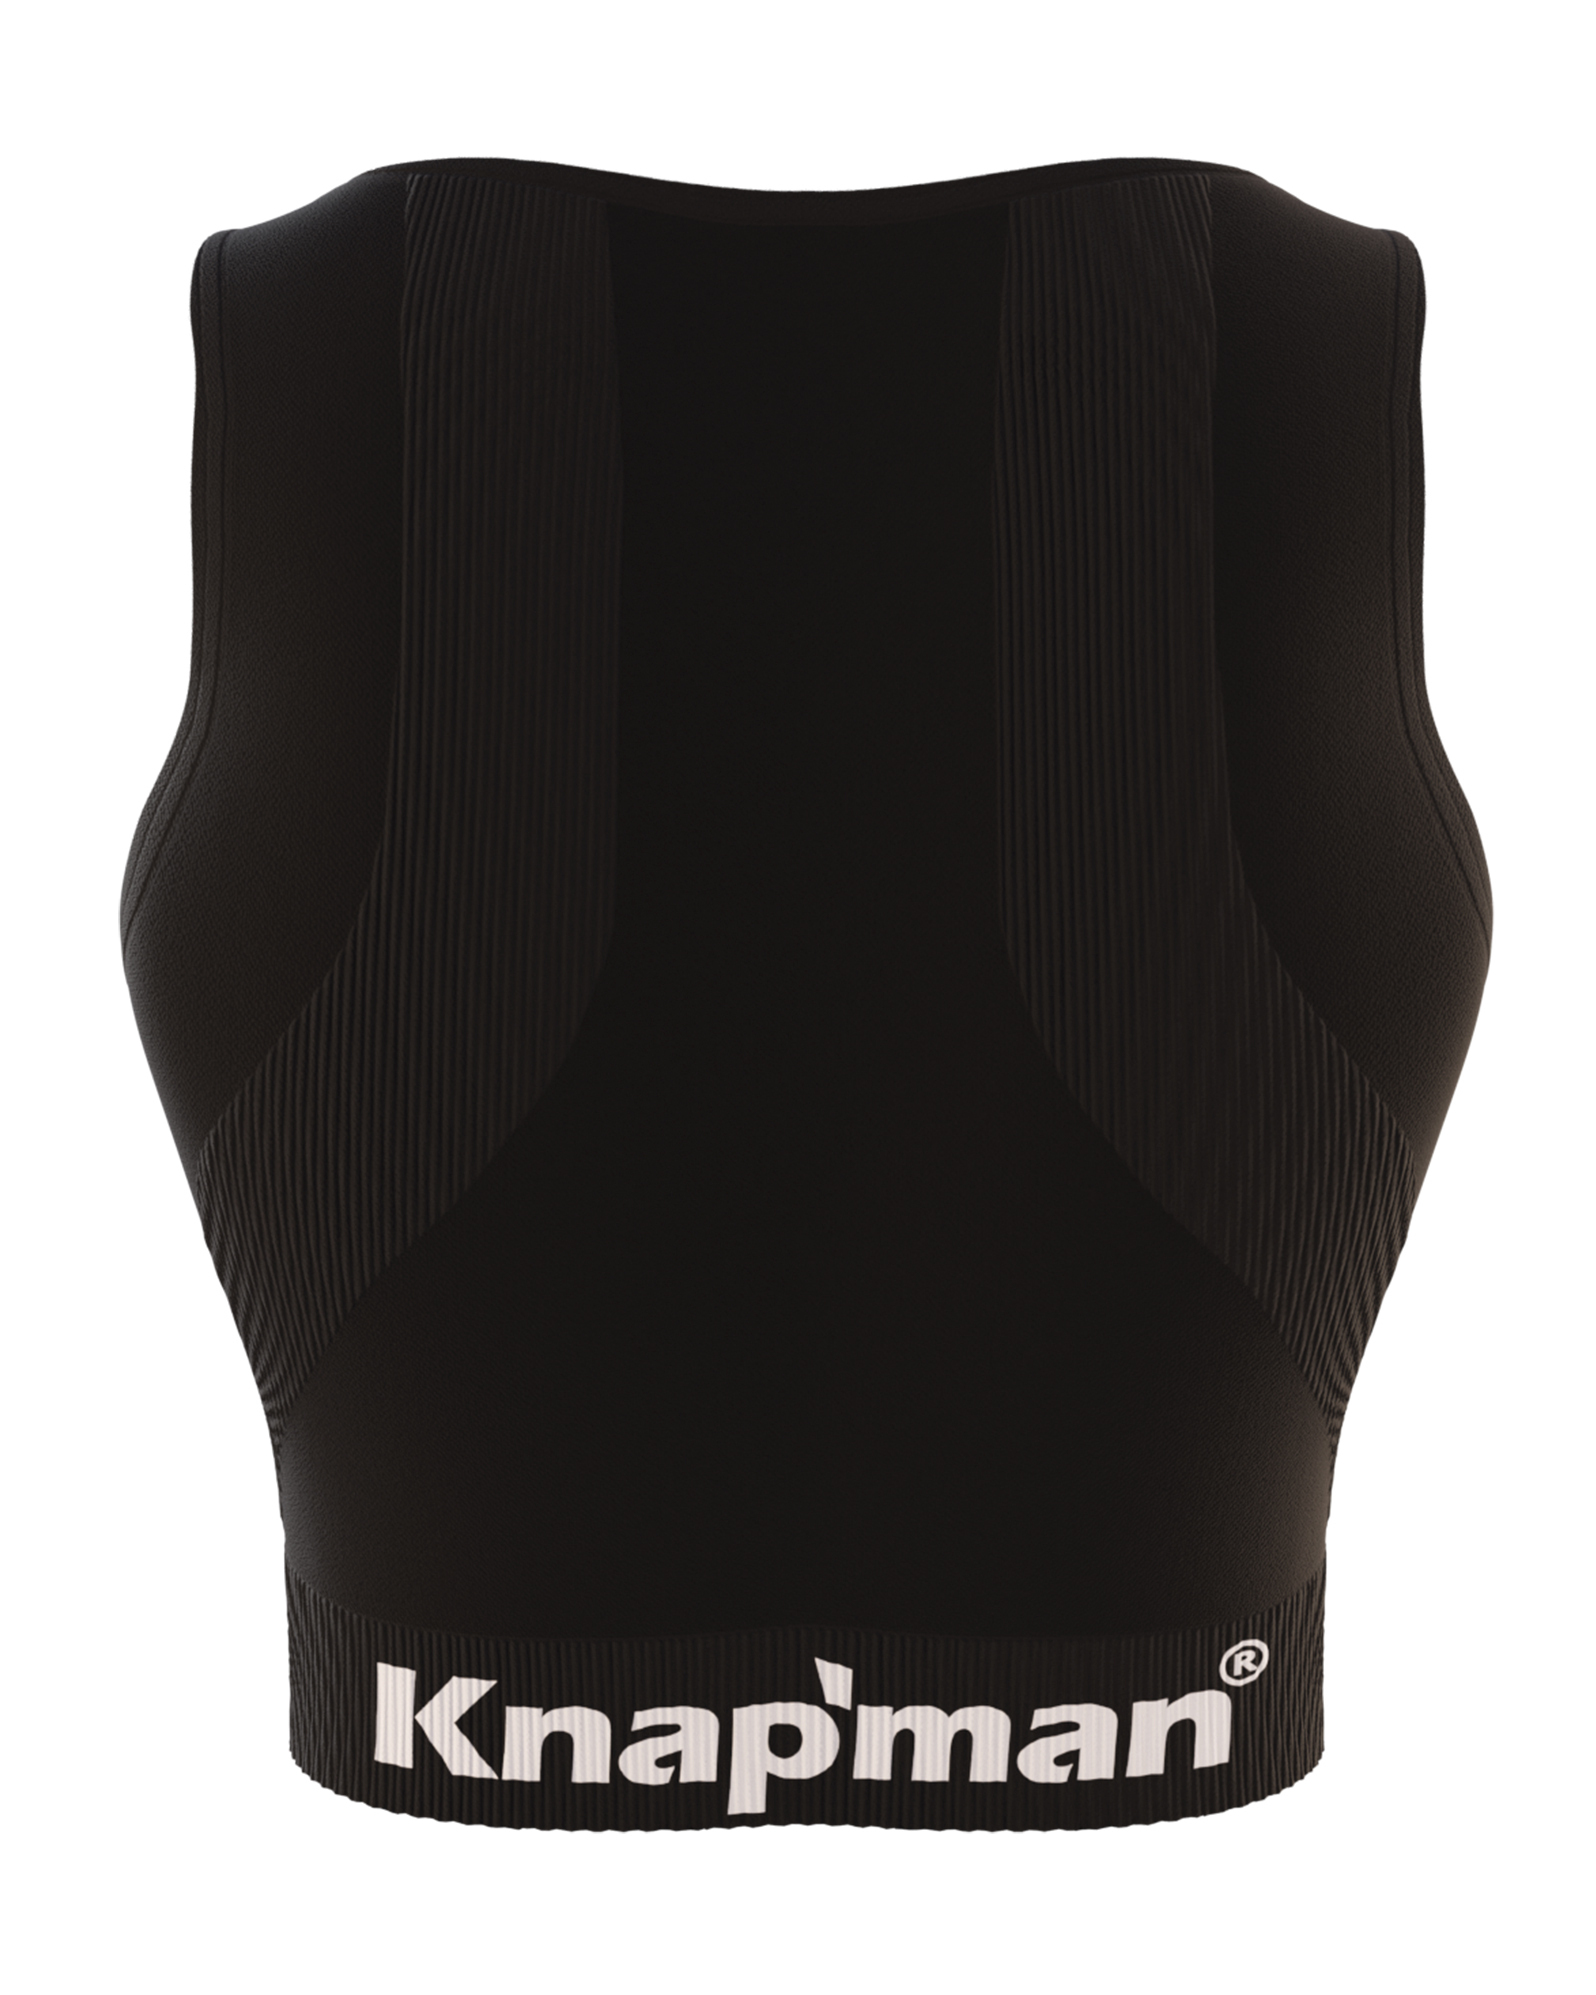 Knap'man FitForm Compression Sports Legging  Black - FitForm Legging -  Knap'man Fitness and Sportswear - online-shop - Knapman